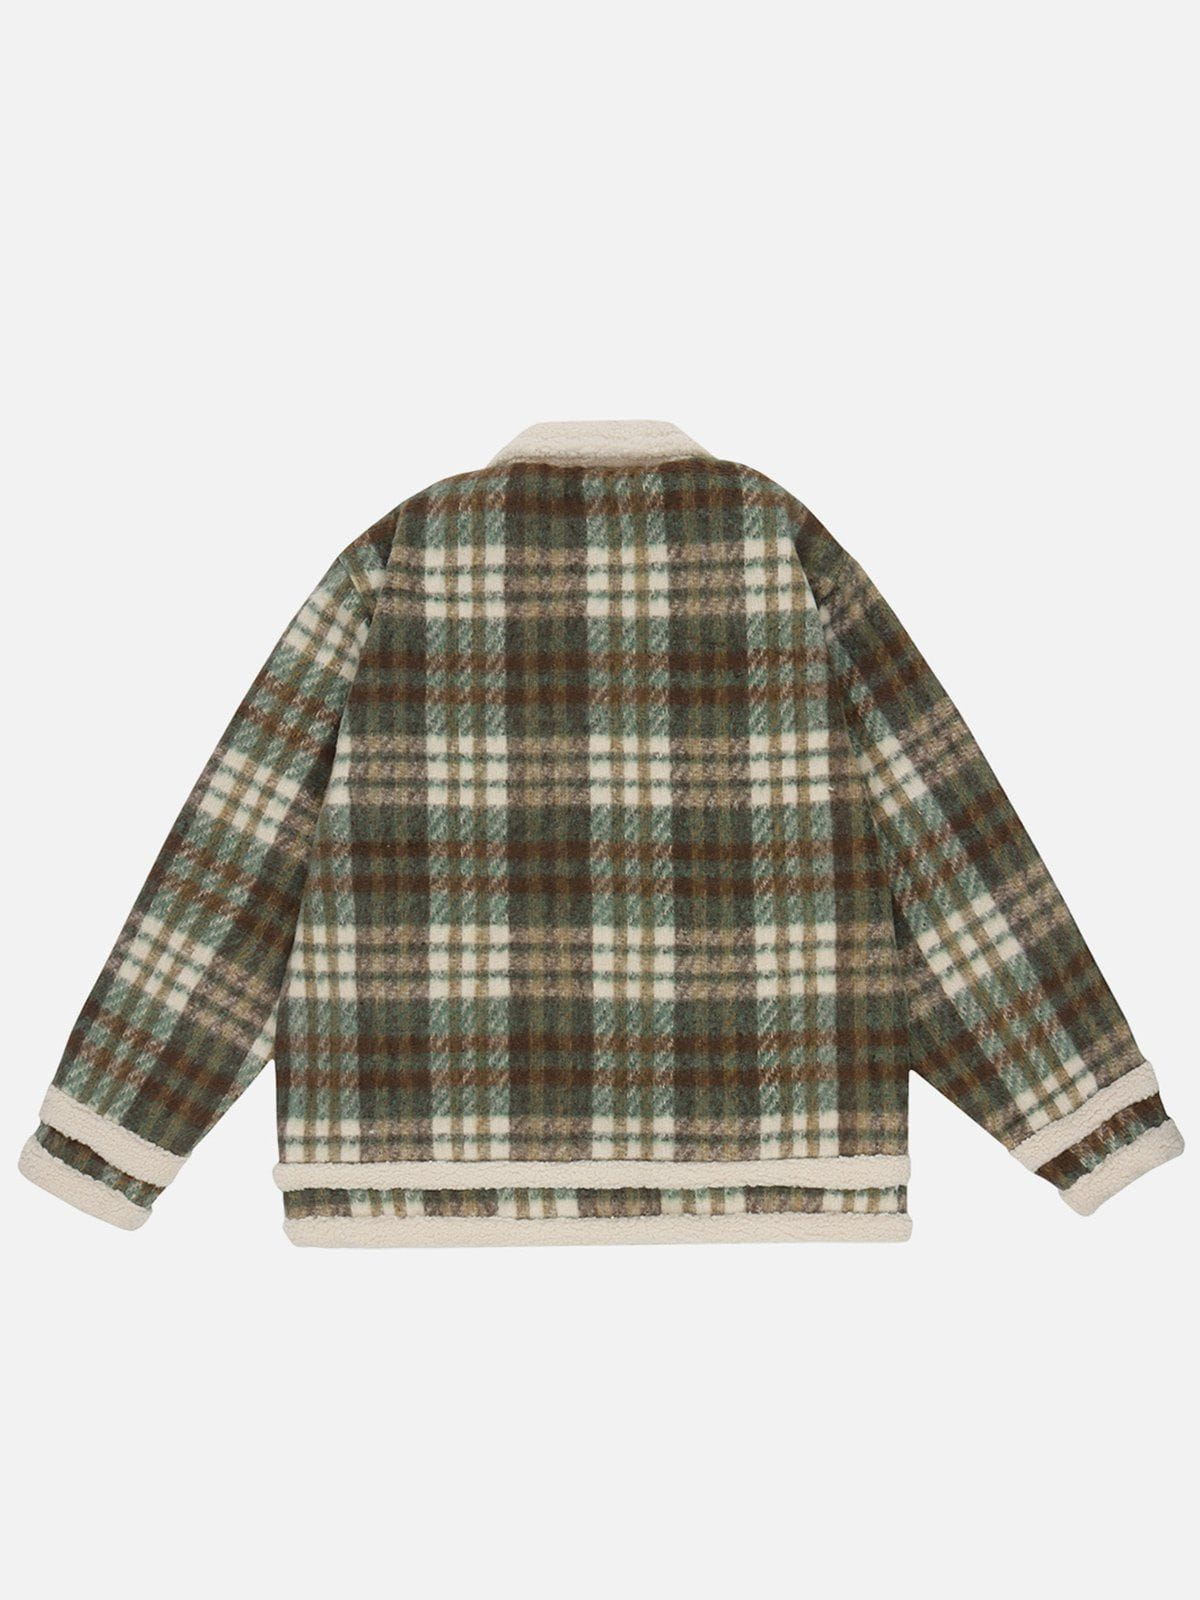 Sneakerland™ - Vintage Check Sherpa Coat